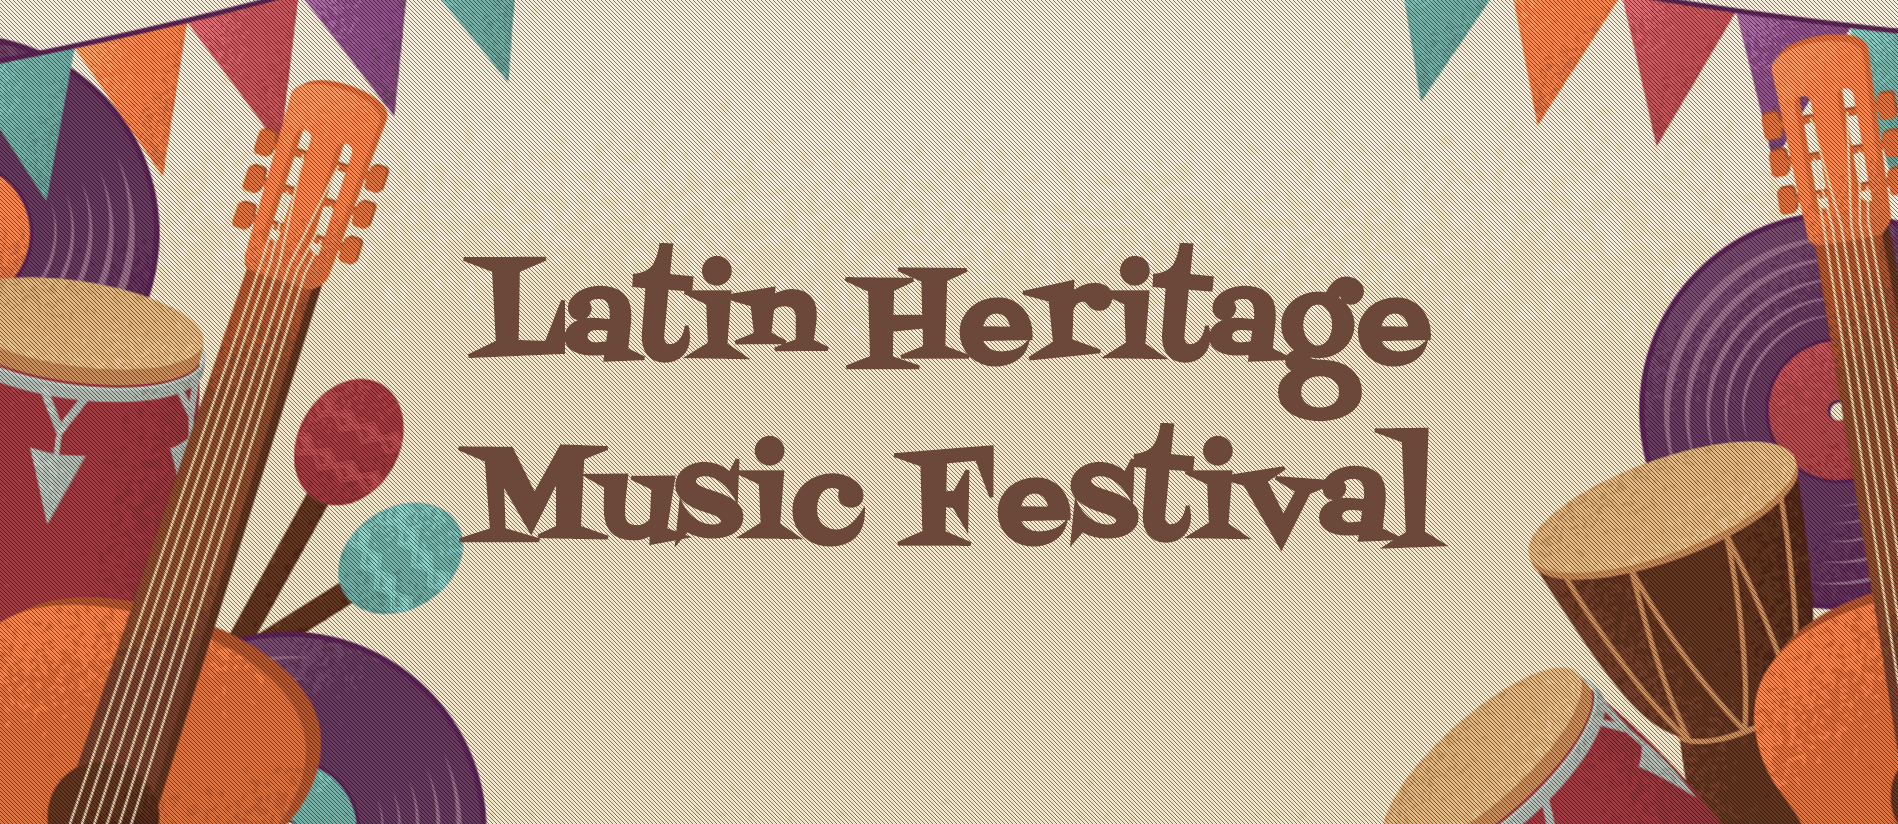 Latin Heritage Music Festival | Suydam Reformed Church